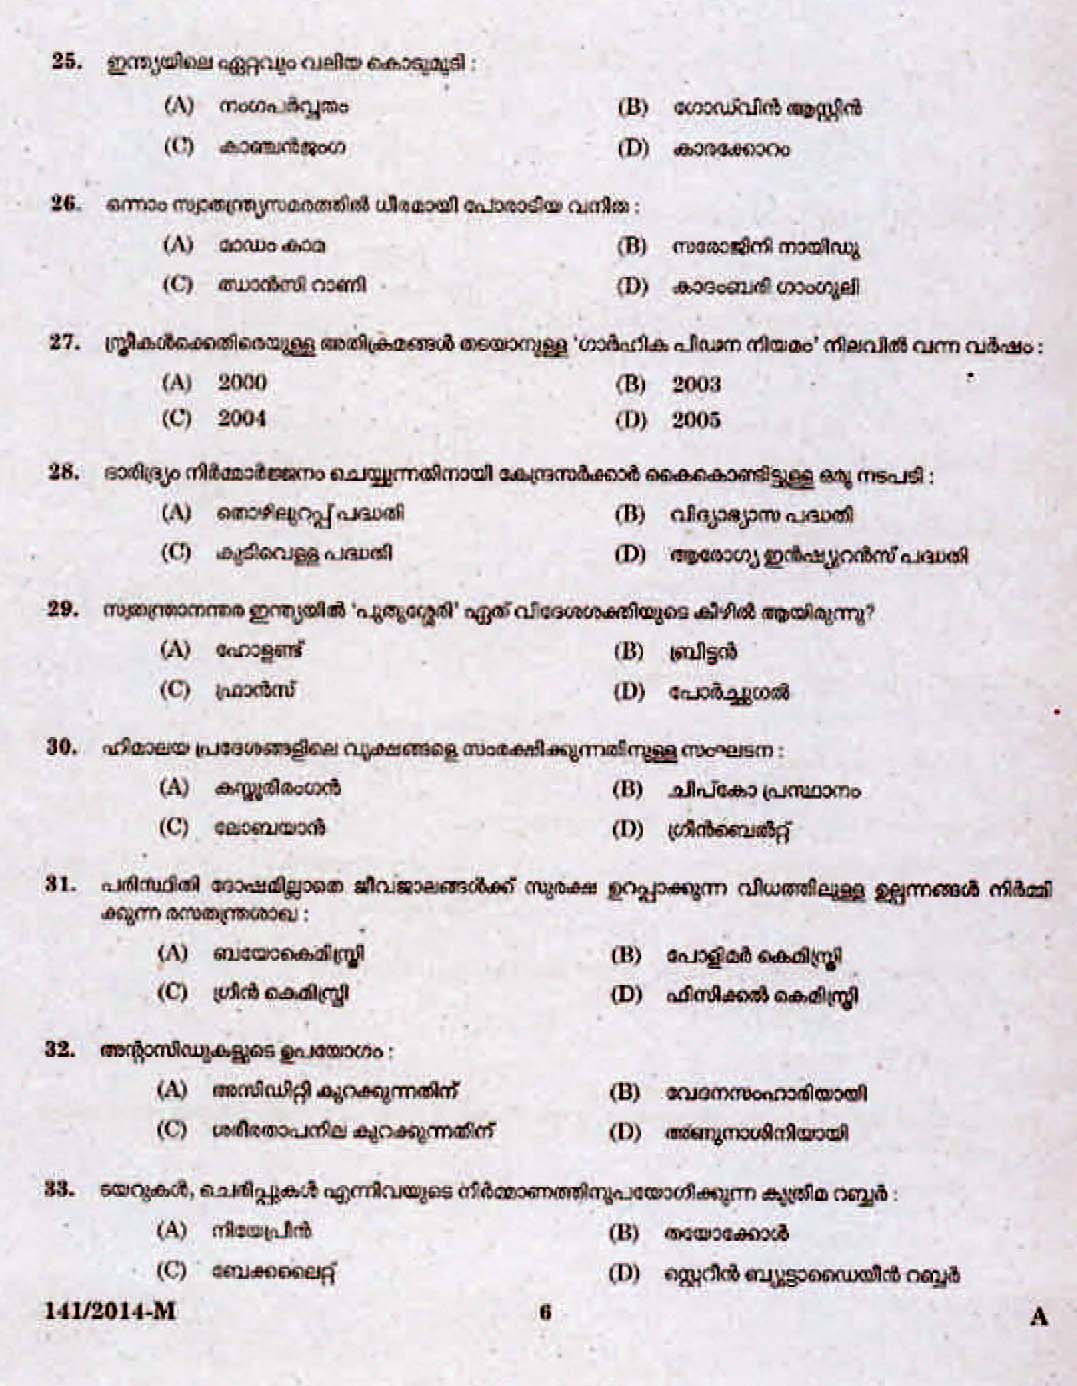 Kerala PSC Assistant Compiler Exam 2014 Question Paper Code 1412014 M 4